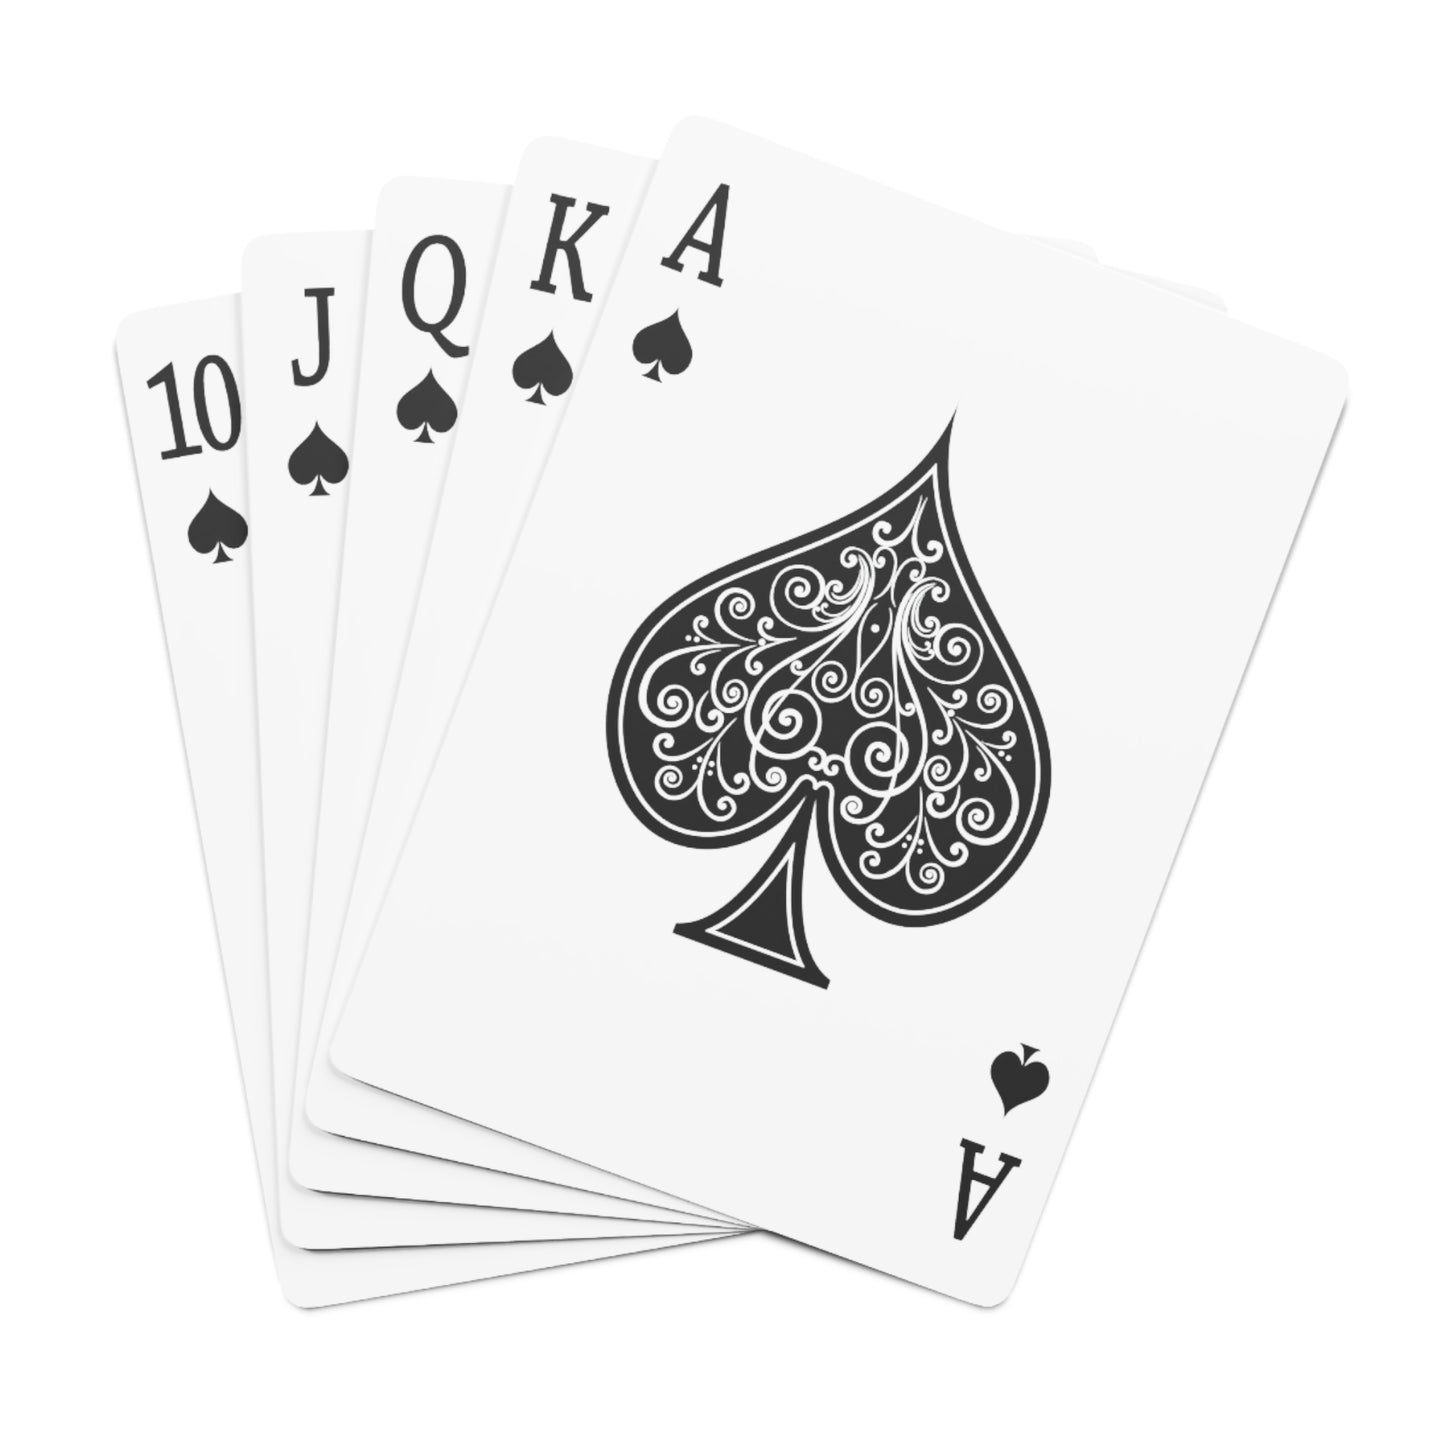 Crescent Cove Pack - Custom Poker Cards